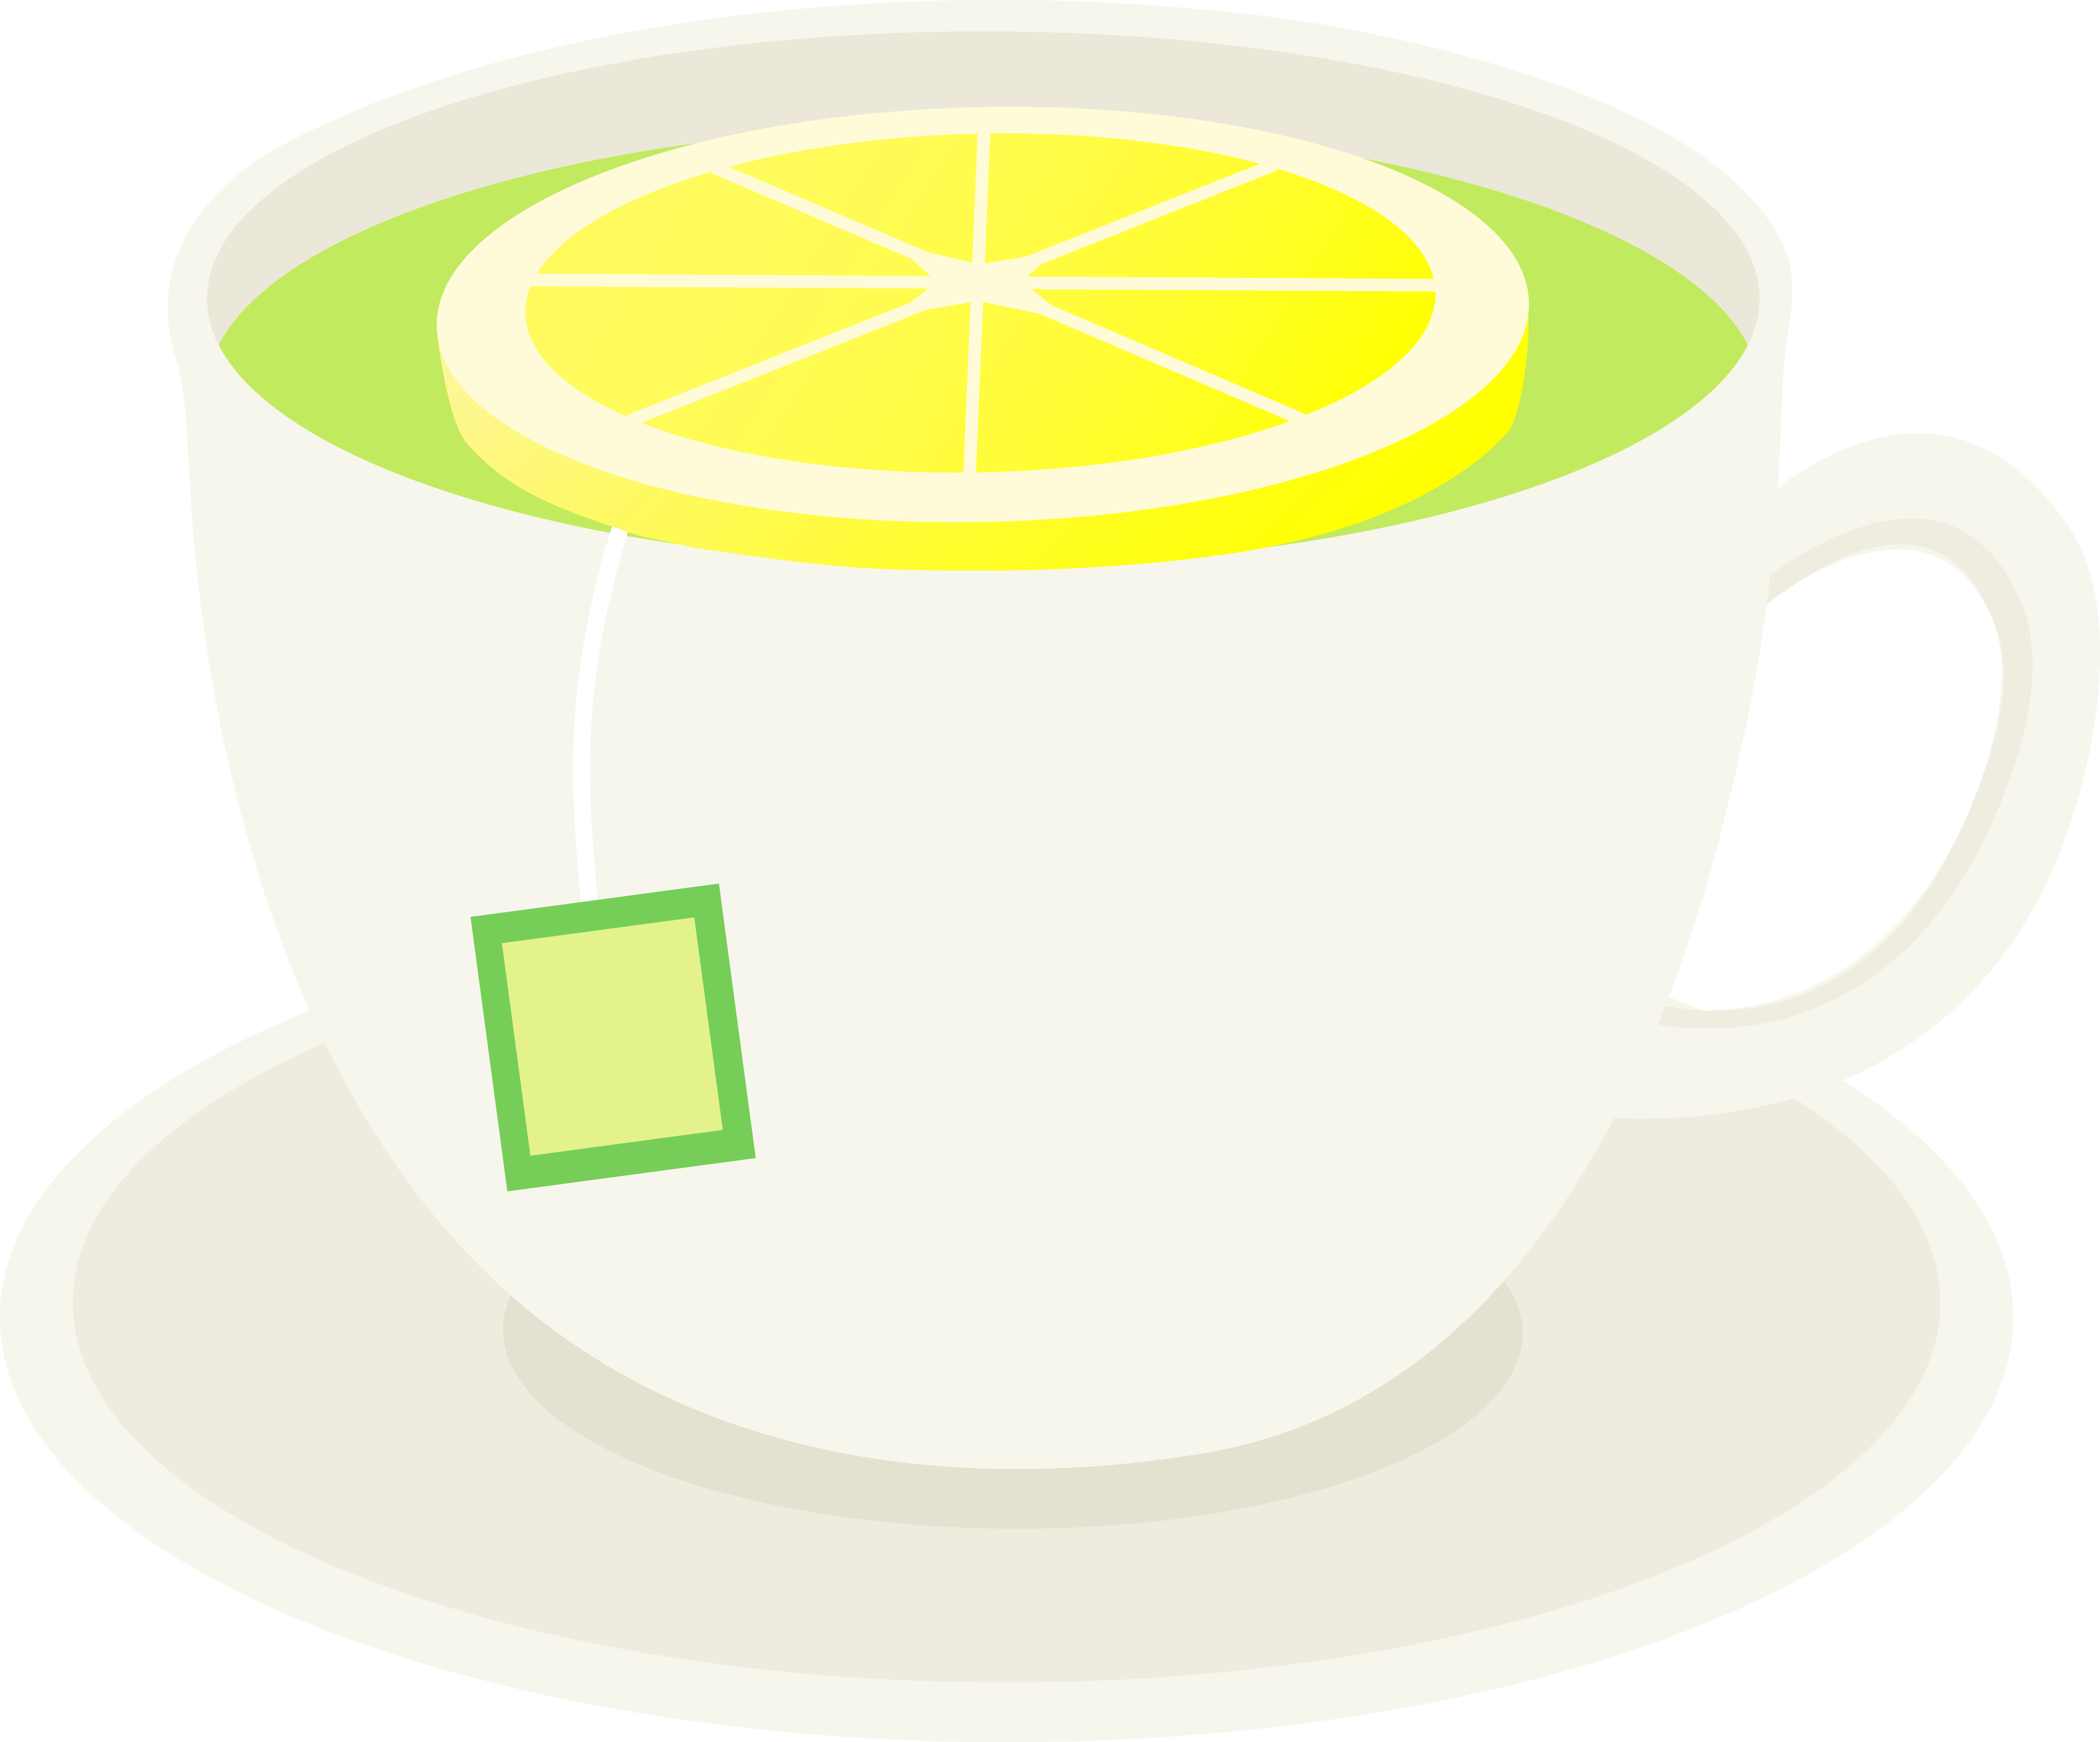 Green Tea With Lemon Slice - Free Clip Art